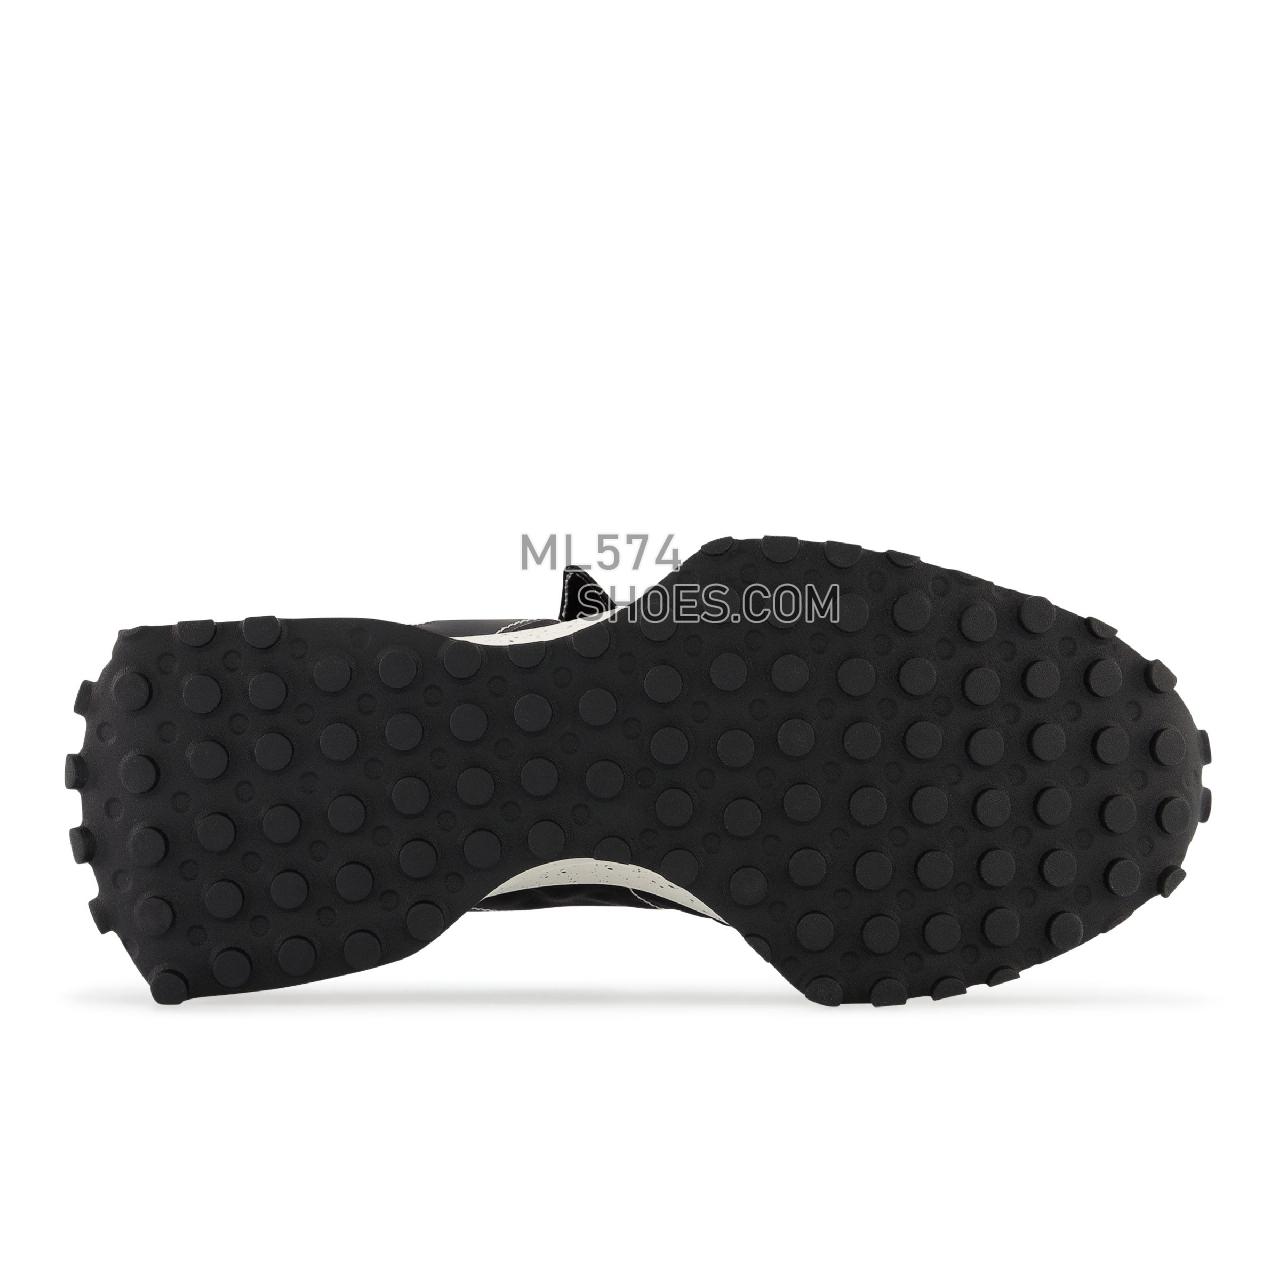 New Balance COLORSxSTUDIOS 327 - Unisex Men's Women's Sport Style Sneakers - Black with Rumba Red - MS327CT